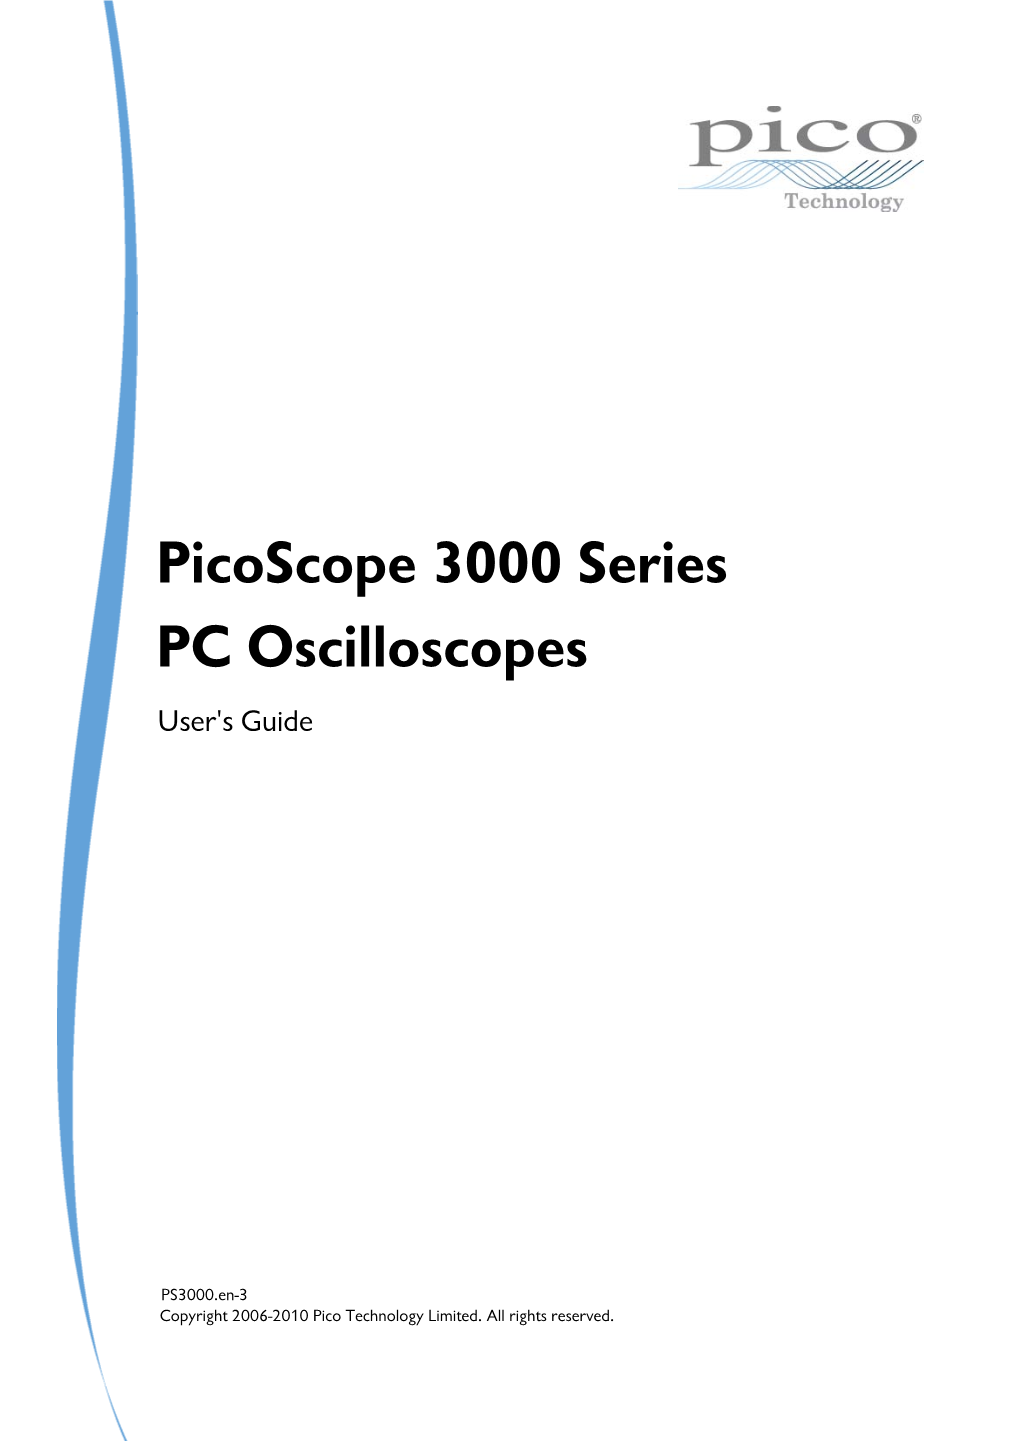 Picoscope 3000 Series User Guide 1 1 Welcome